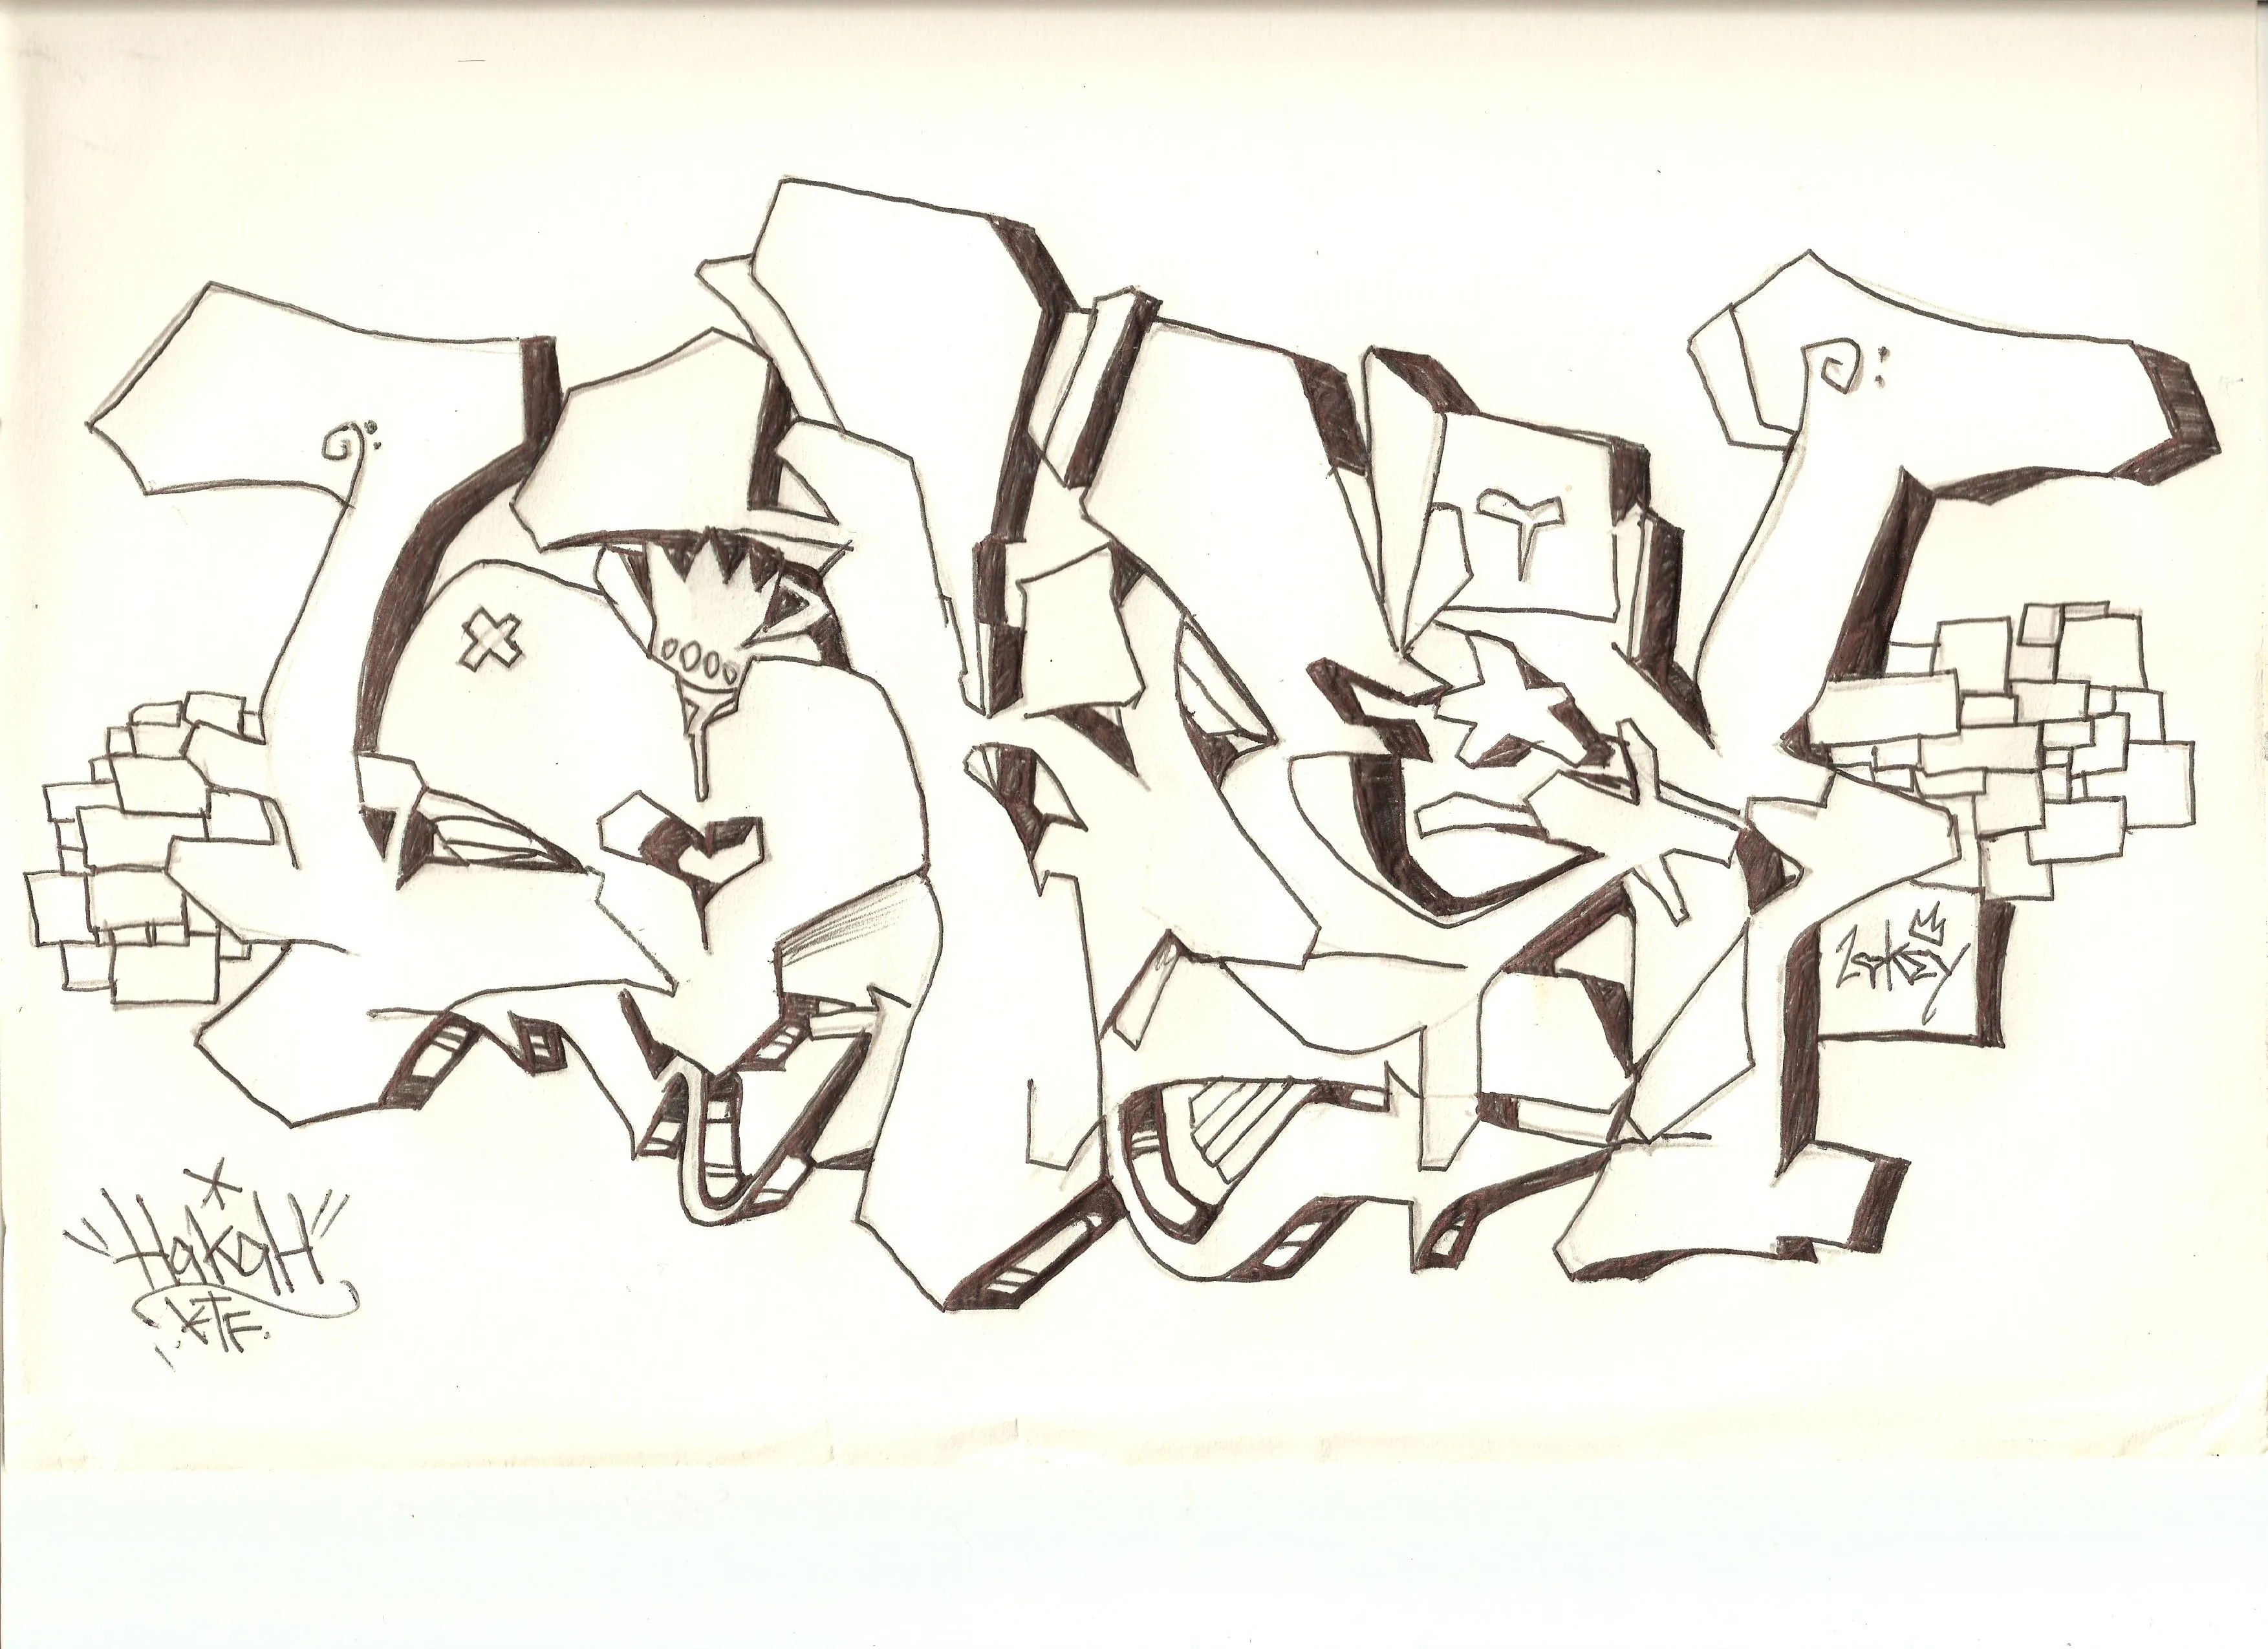 graffiti sketch | Jer force one's